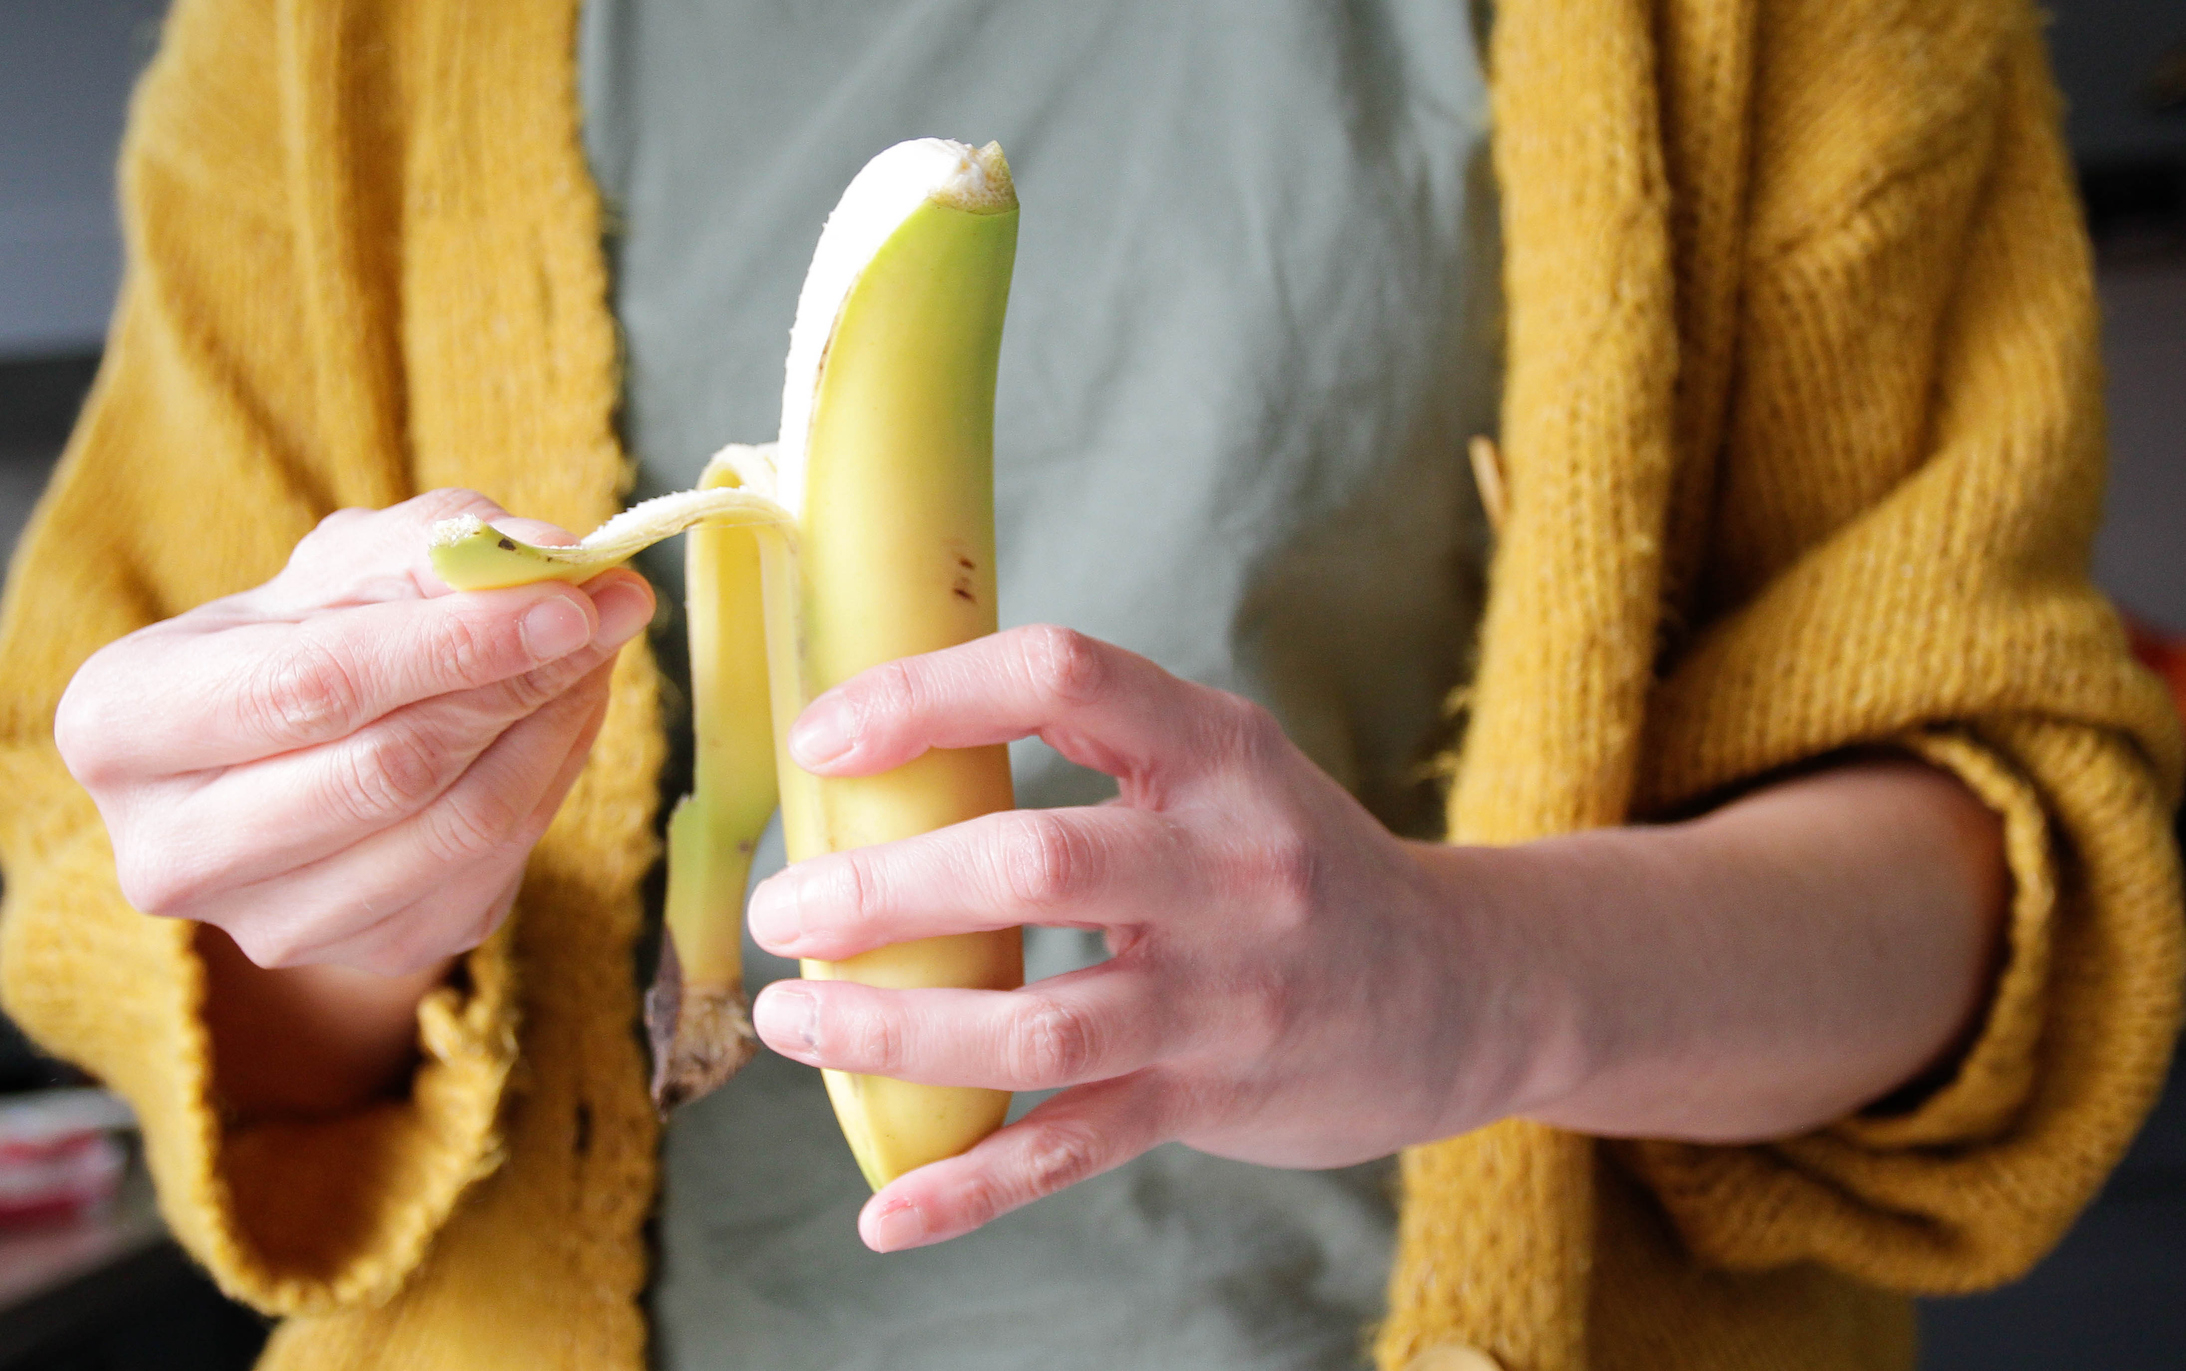 Person peeling a banana, wearing a yellow cardigan over a grey shirt